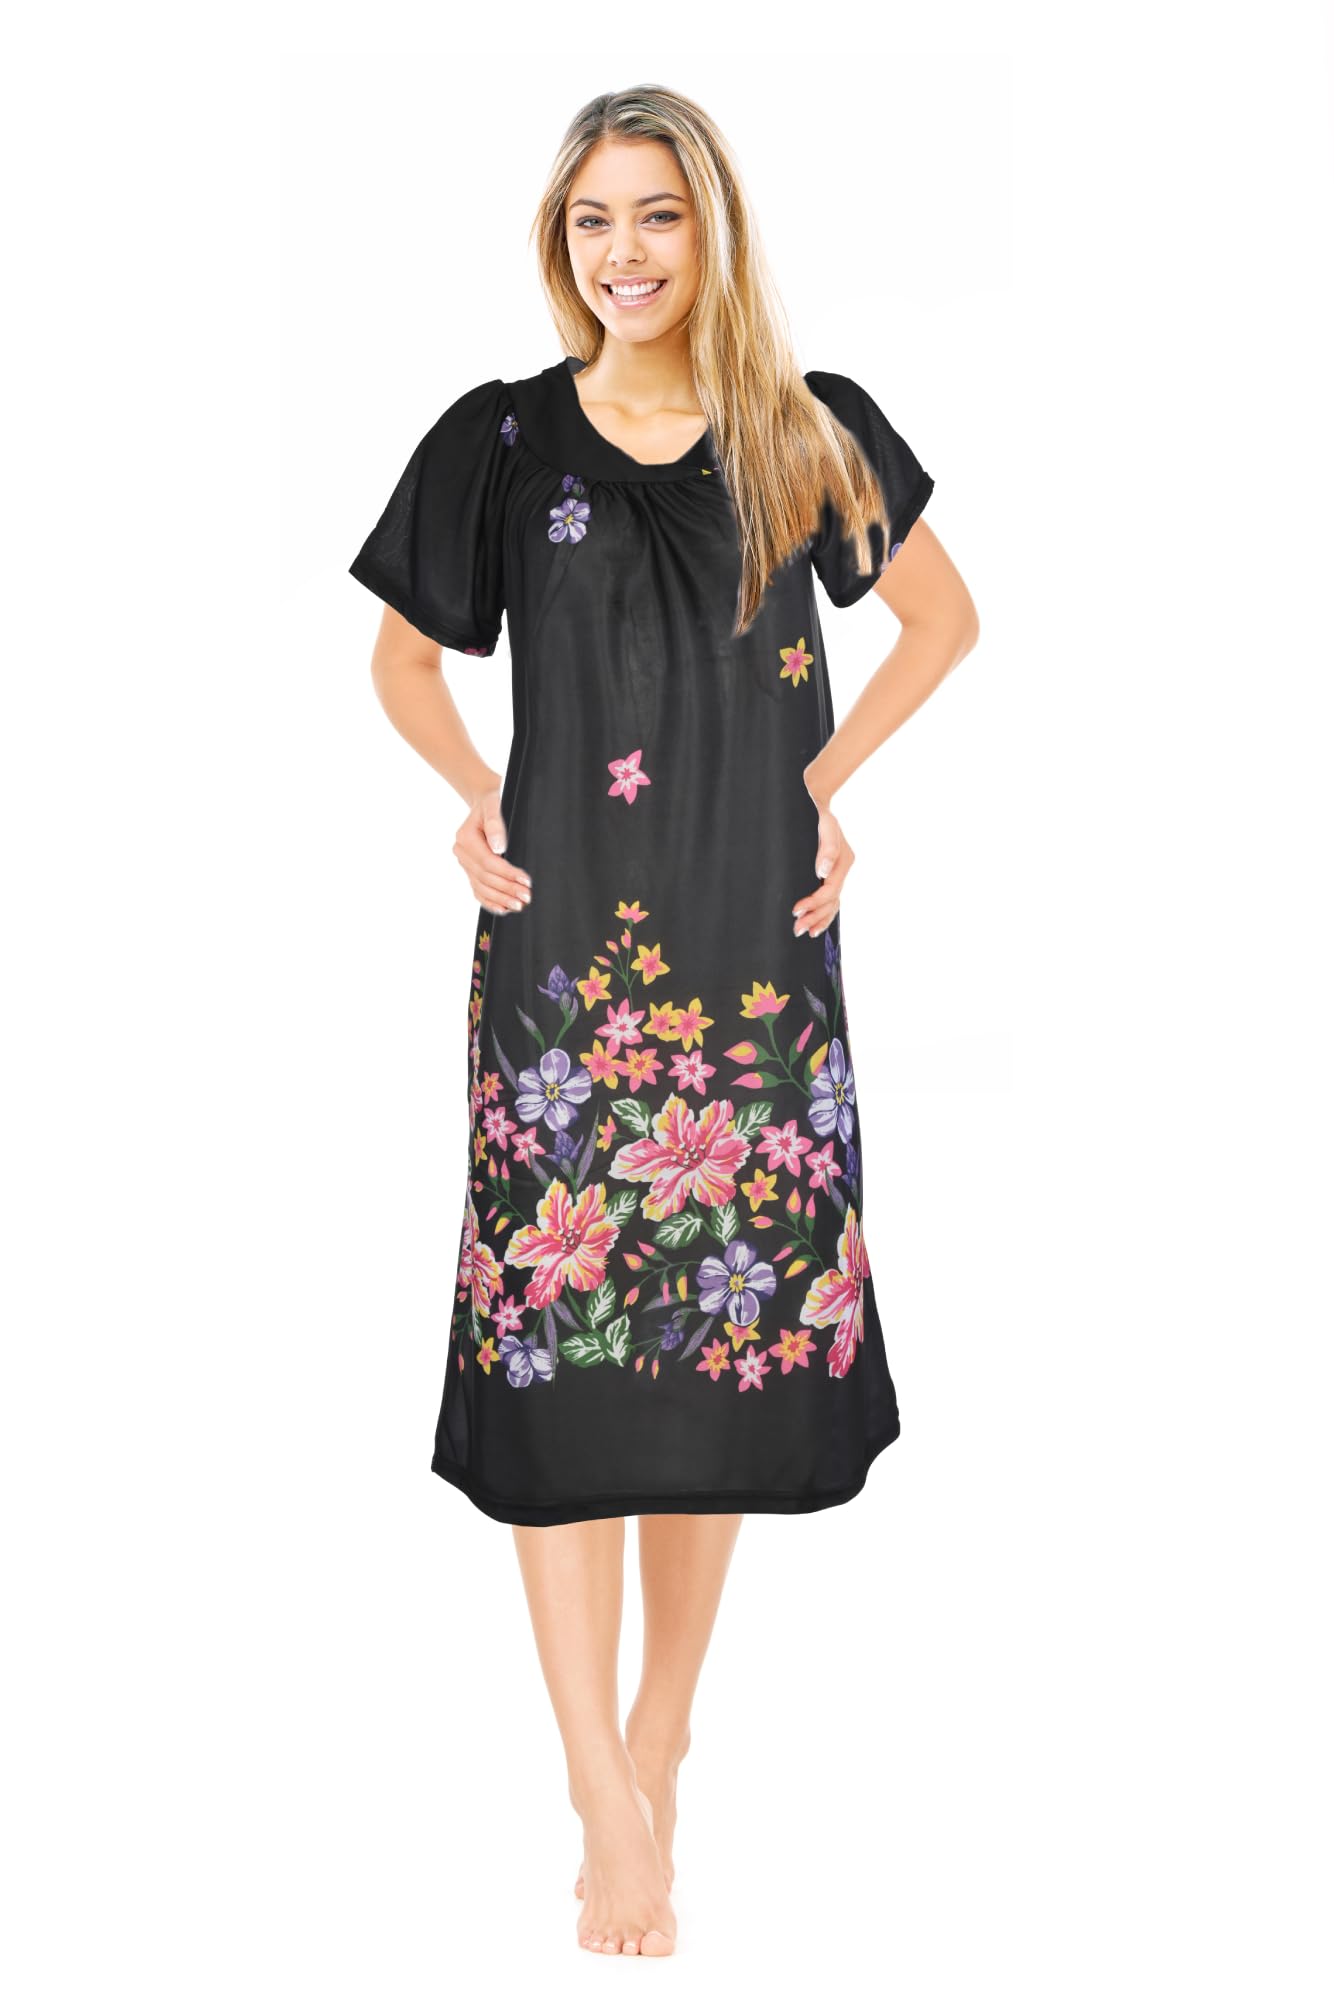 JEFFRICO Womens Nightgowns Muumuu Lounger House Dress Sleepwear Silky Soft Pajama Dress Nightshirts